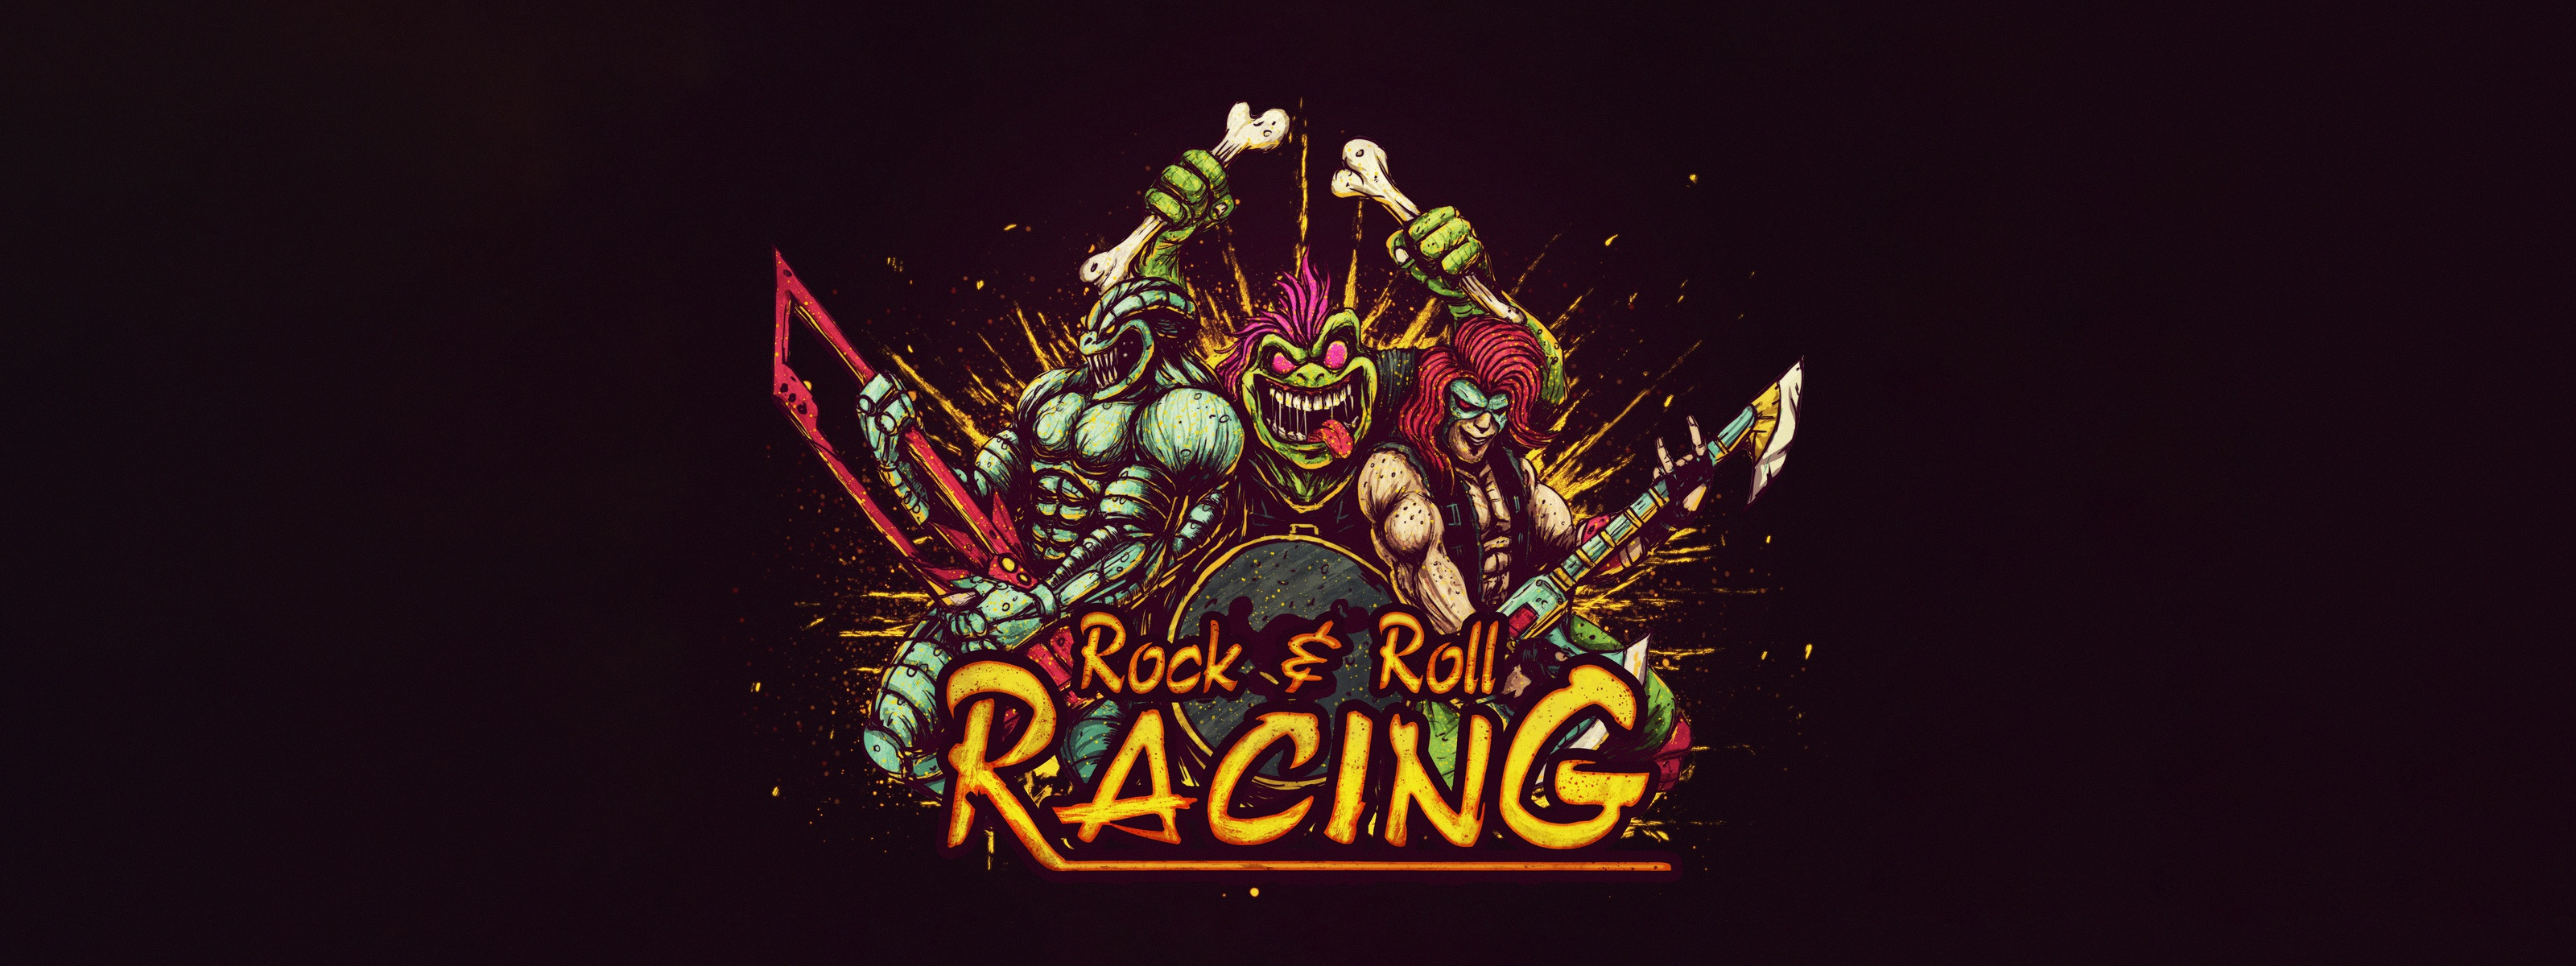 Rock n roll racing steam фото 21